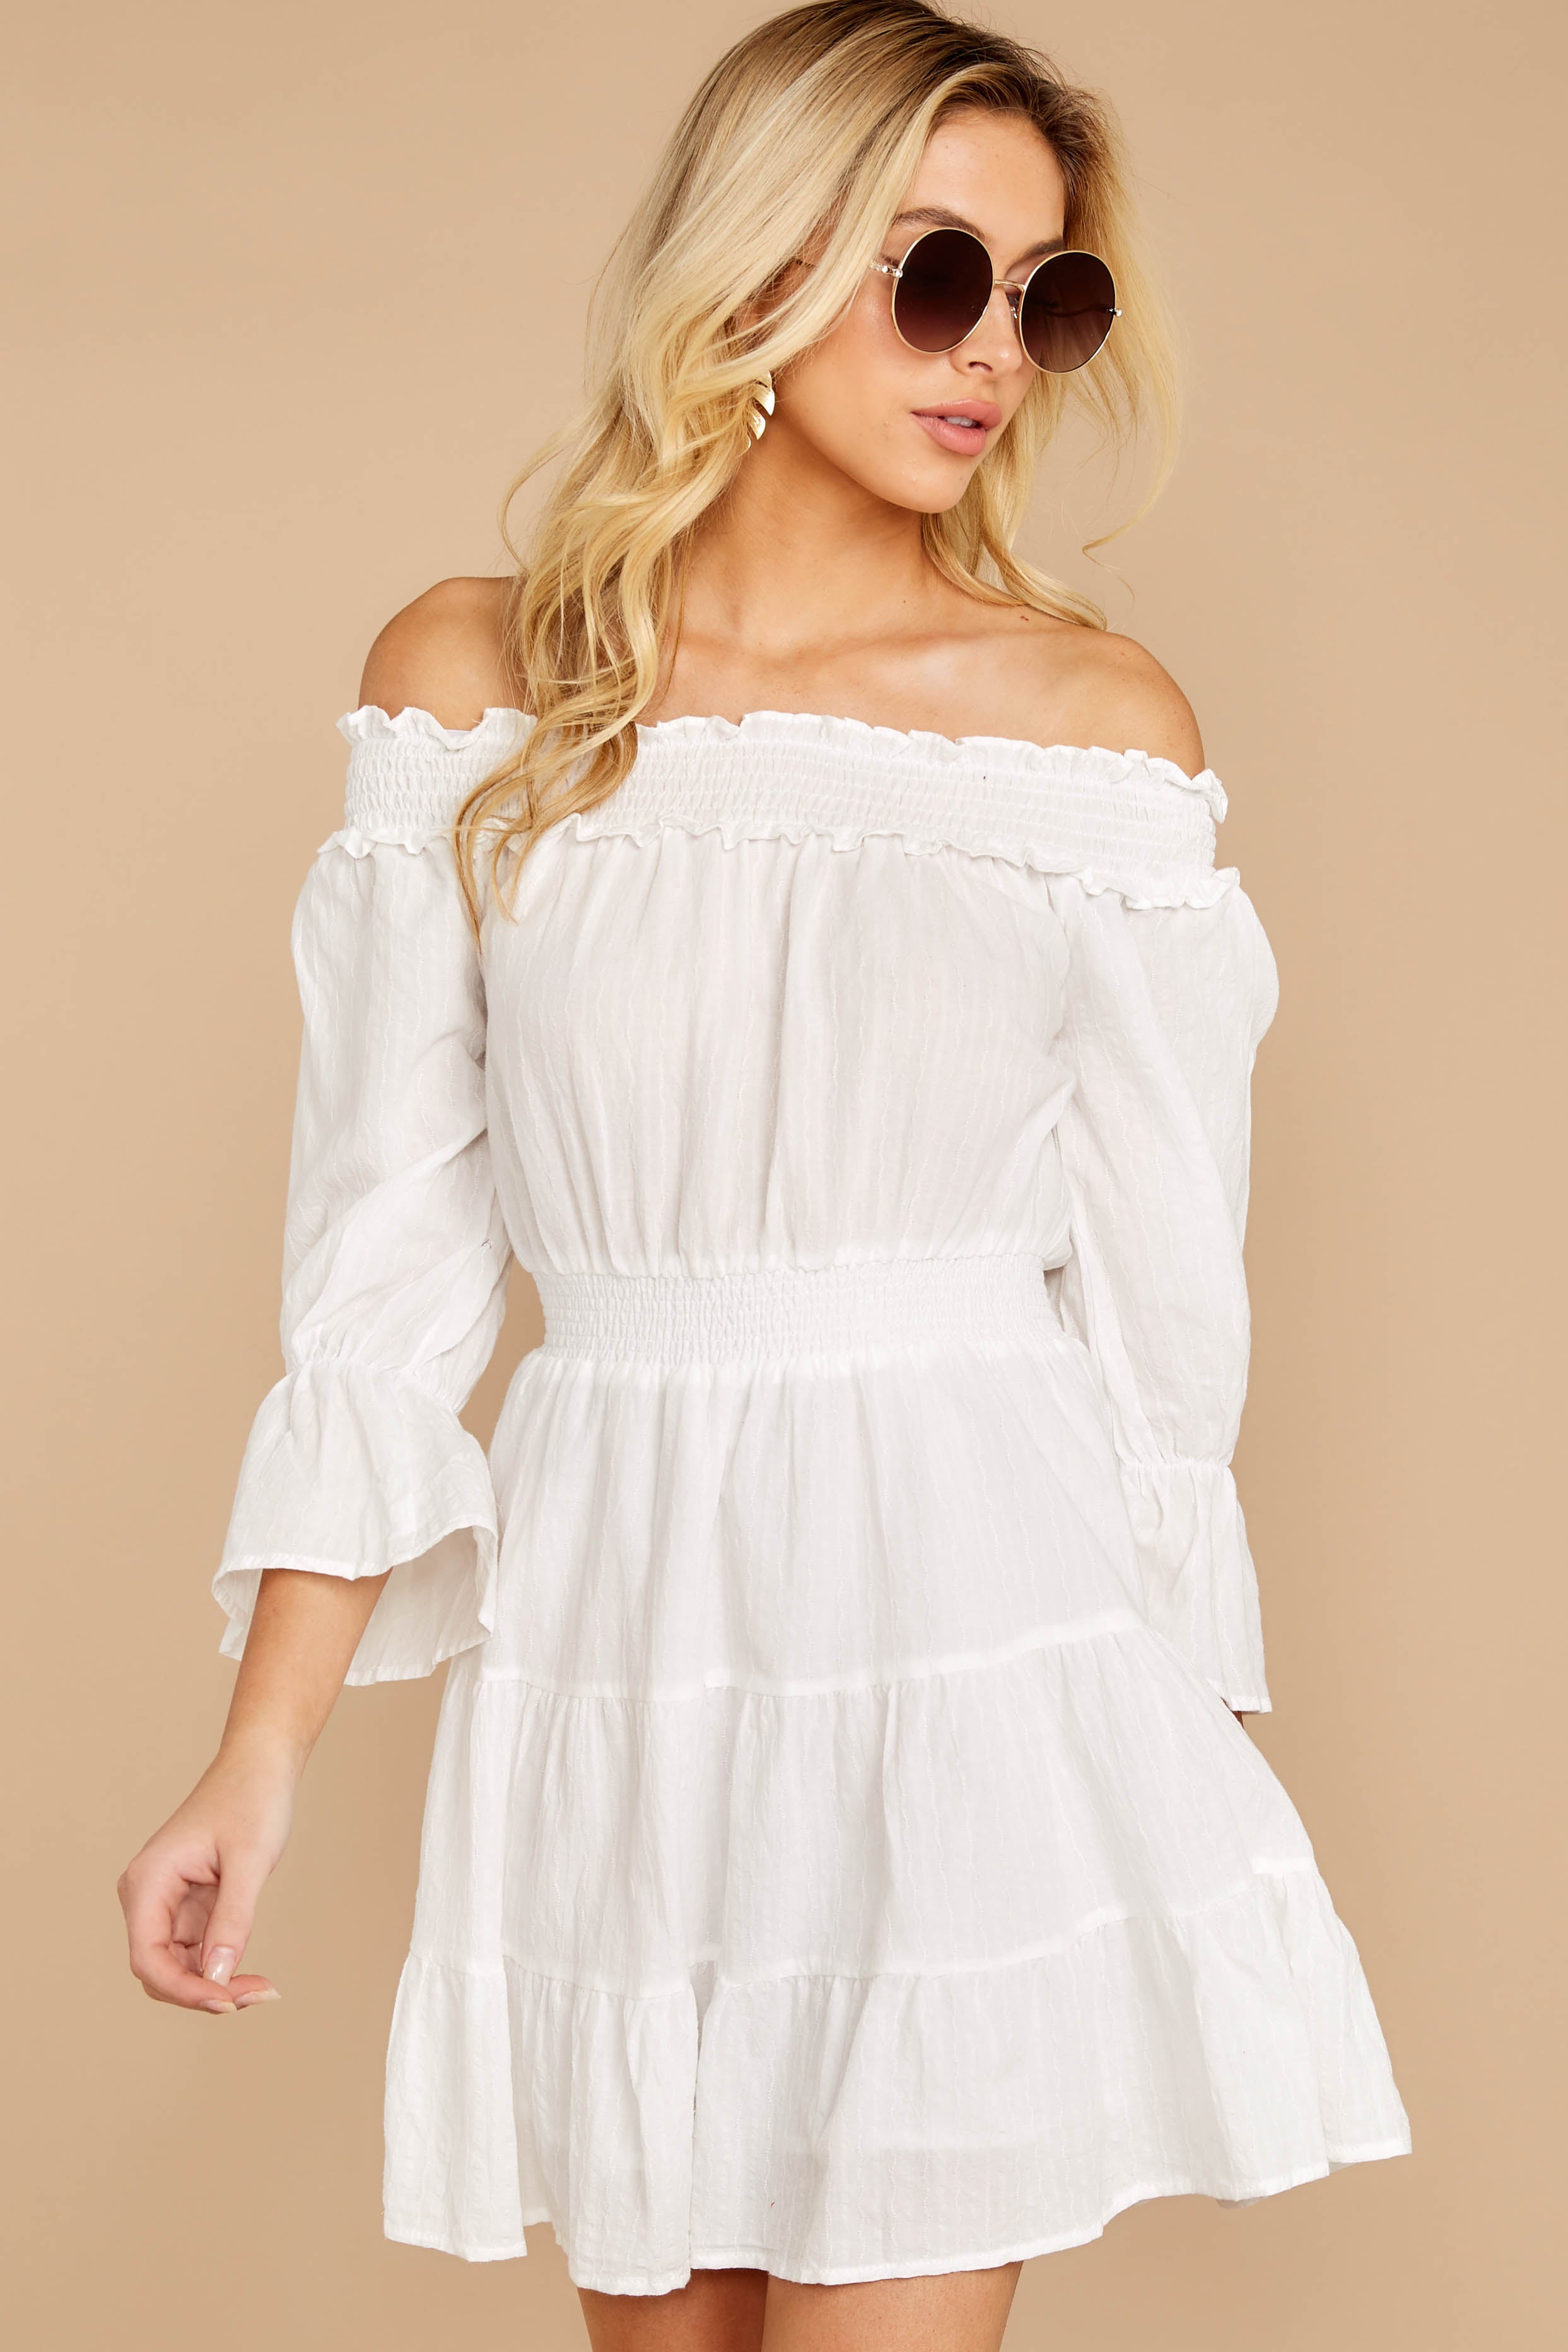 Cute White Off The Shoulder Dress - Long Sleeve Dress - Dress - $48.00 ...